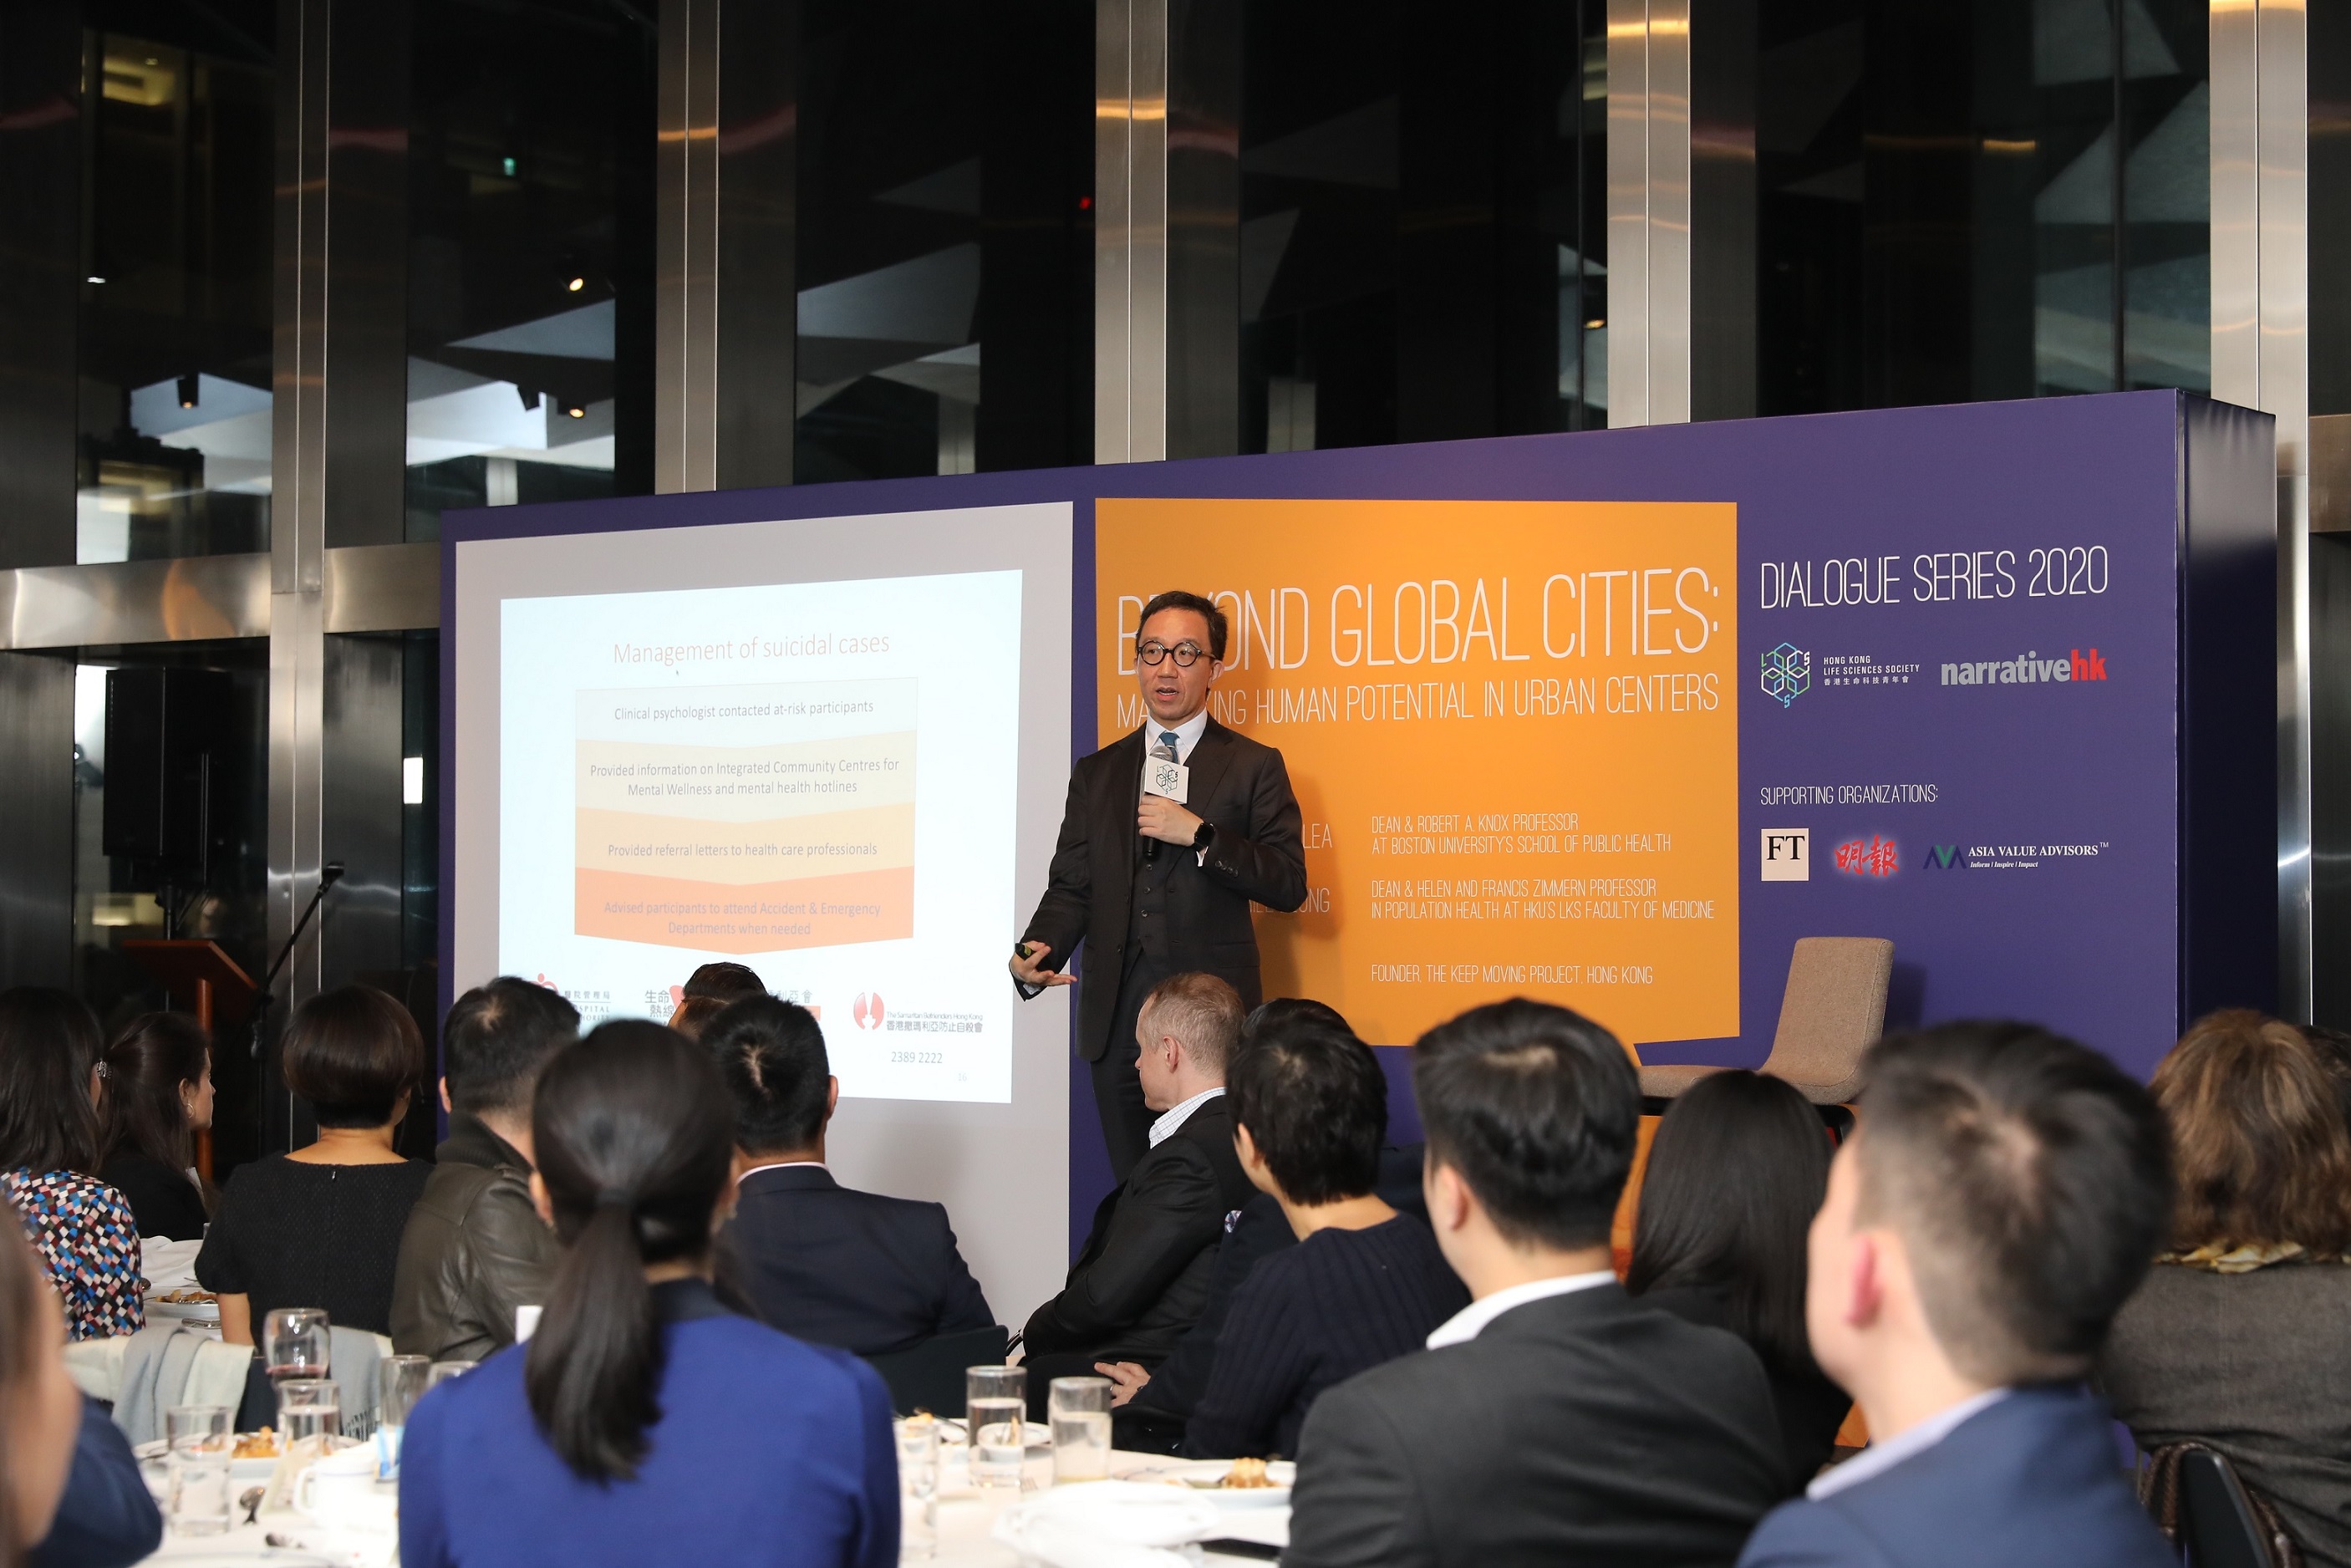 Beyond Global Cities Dialogue Series 2020 － Maximizing Human Potential in Urban Centers